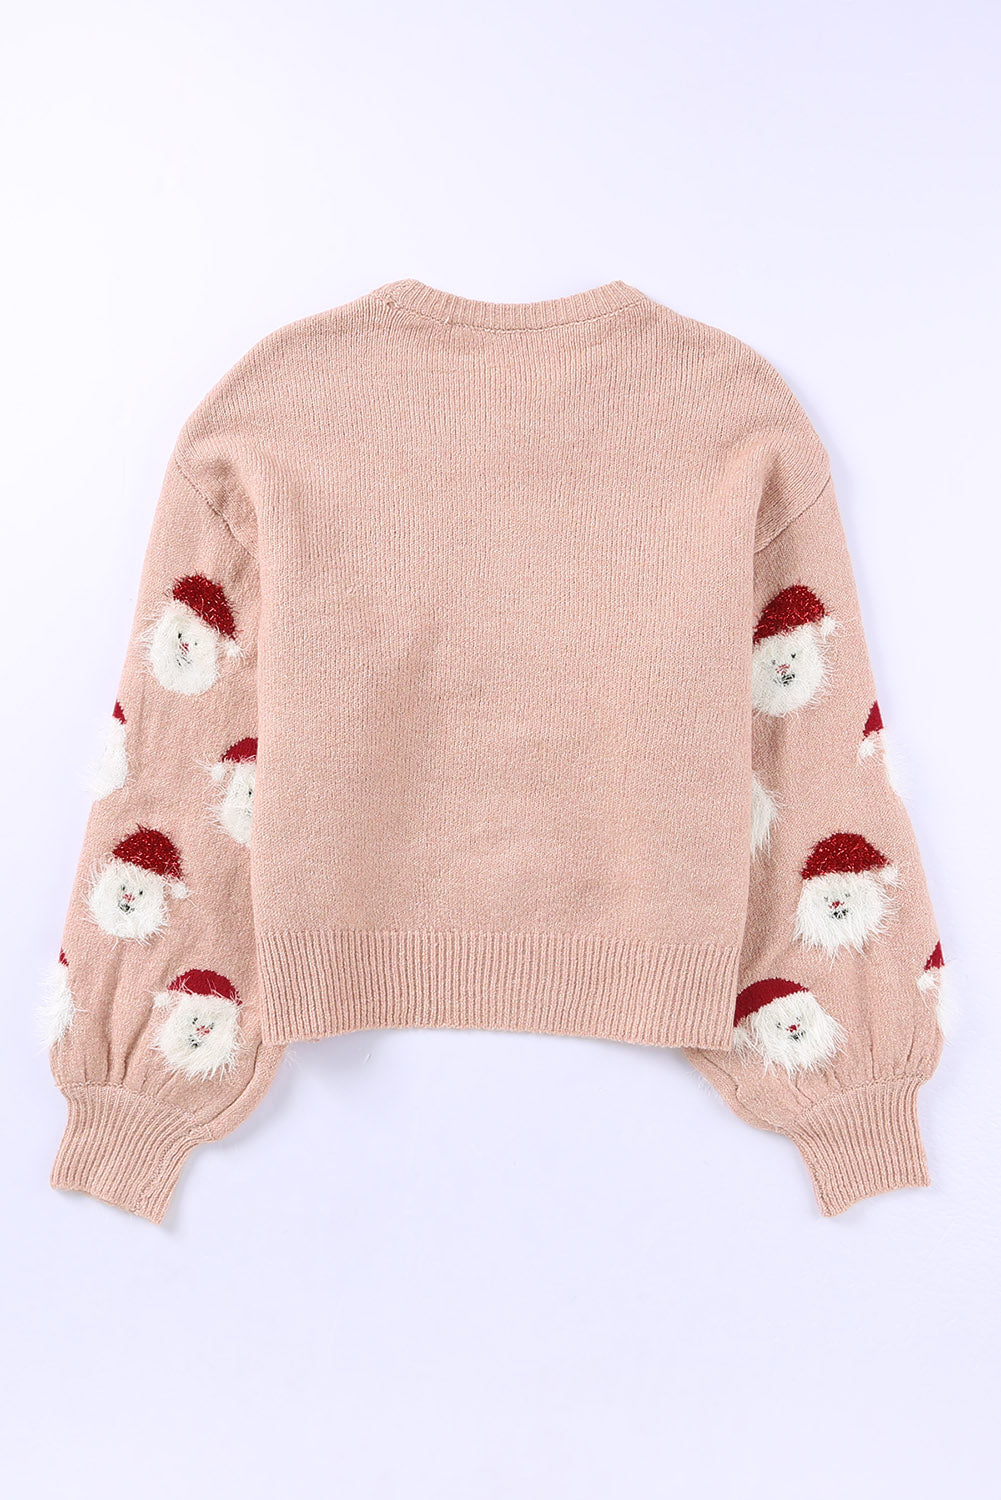 Light Pink Fuzzy Christmas Santa Clause Sweater Dress